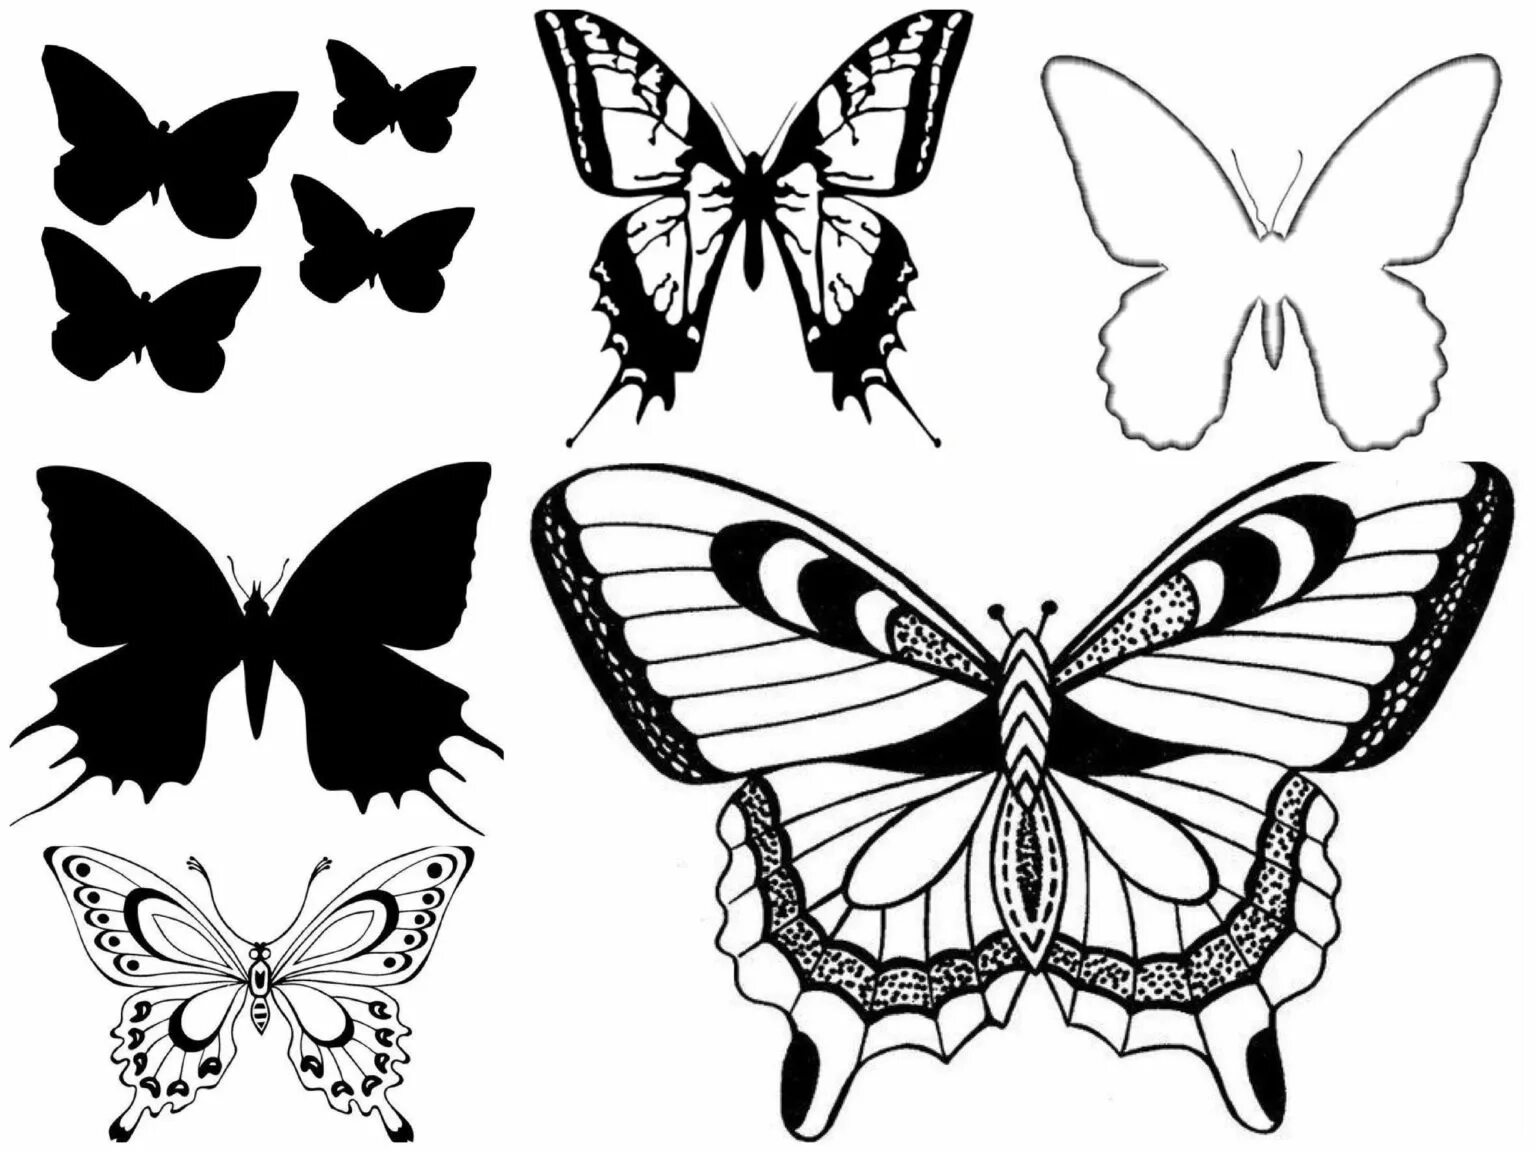 Трафареты бабочки. Трафарет бабочки для вырезания. Трафареты бабочек для декора. Бабочка шаблон для вырезания.